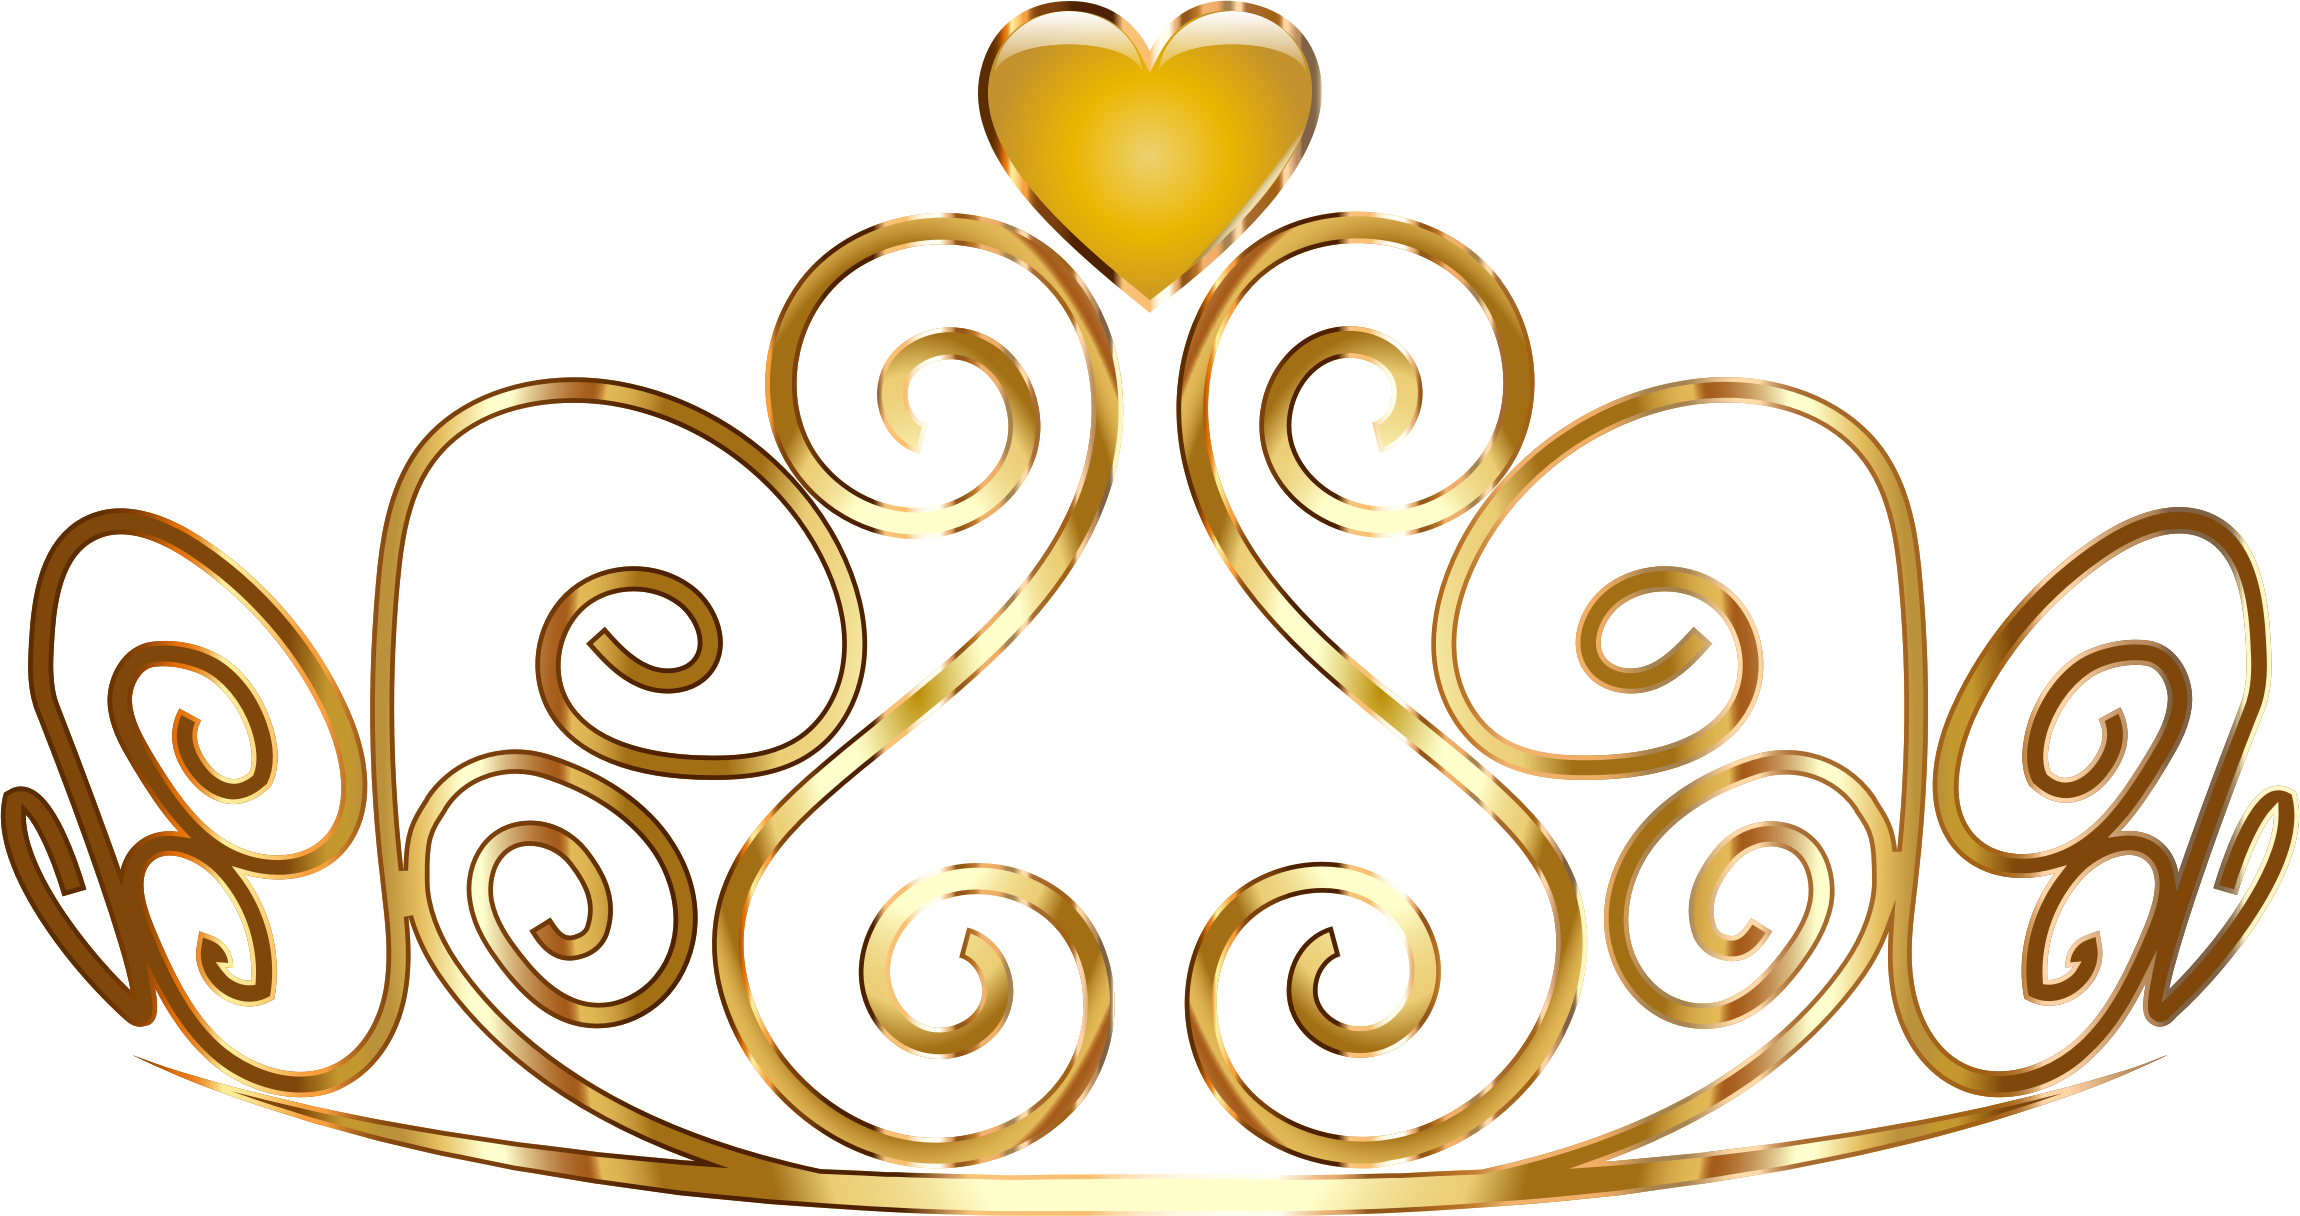 Crown Princess Gold Clip Art Crown Png Download 23001216 Free